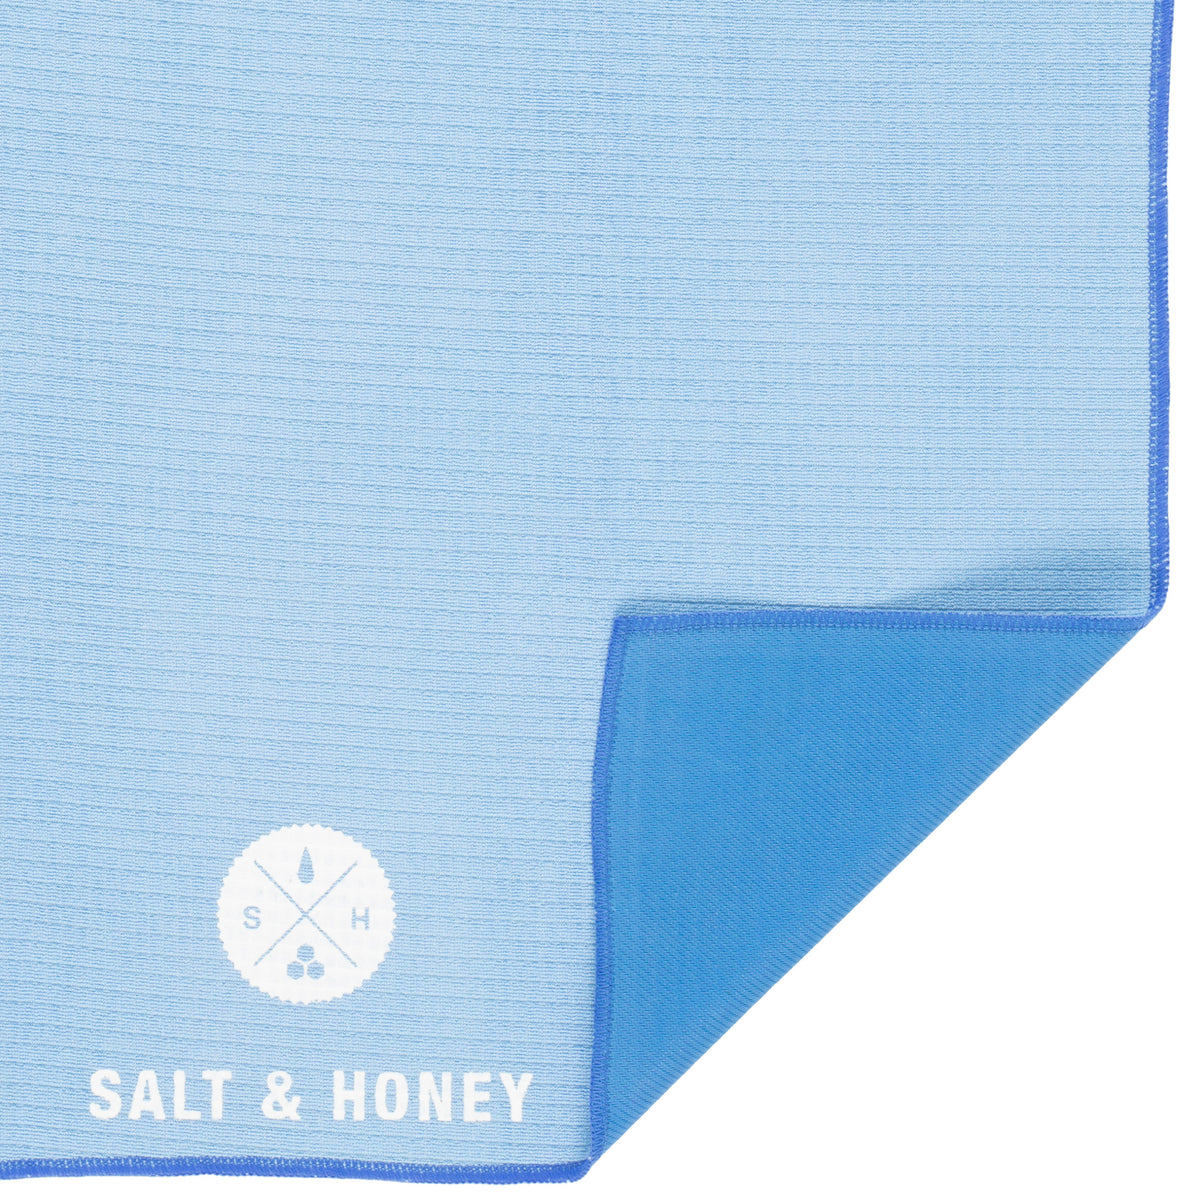 Pilates Reformer Non-Slip Mat Towel (Included 2 Pcs Shoulder Block Covers)  (NAVY BLUE), Mat Towels -  Canada